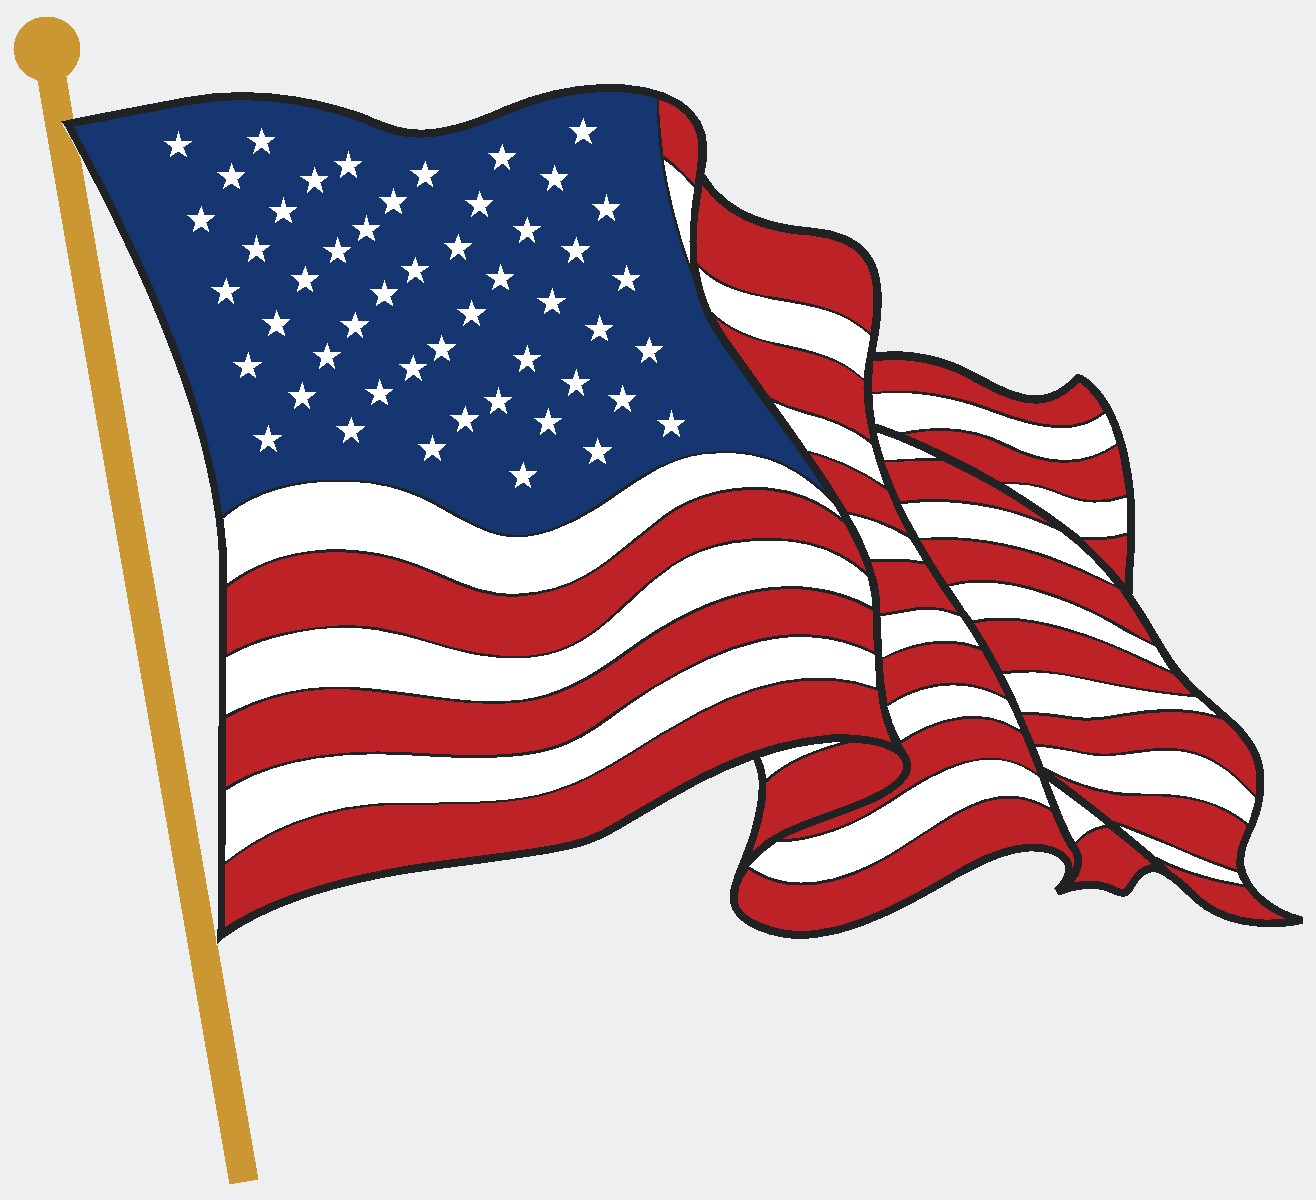 ... American flag free flag c - Flag Images Clip Art